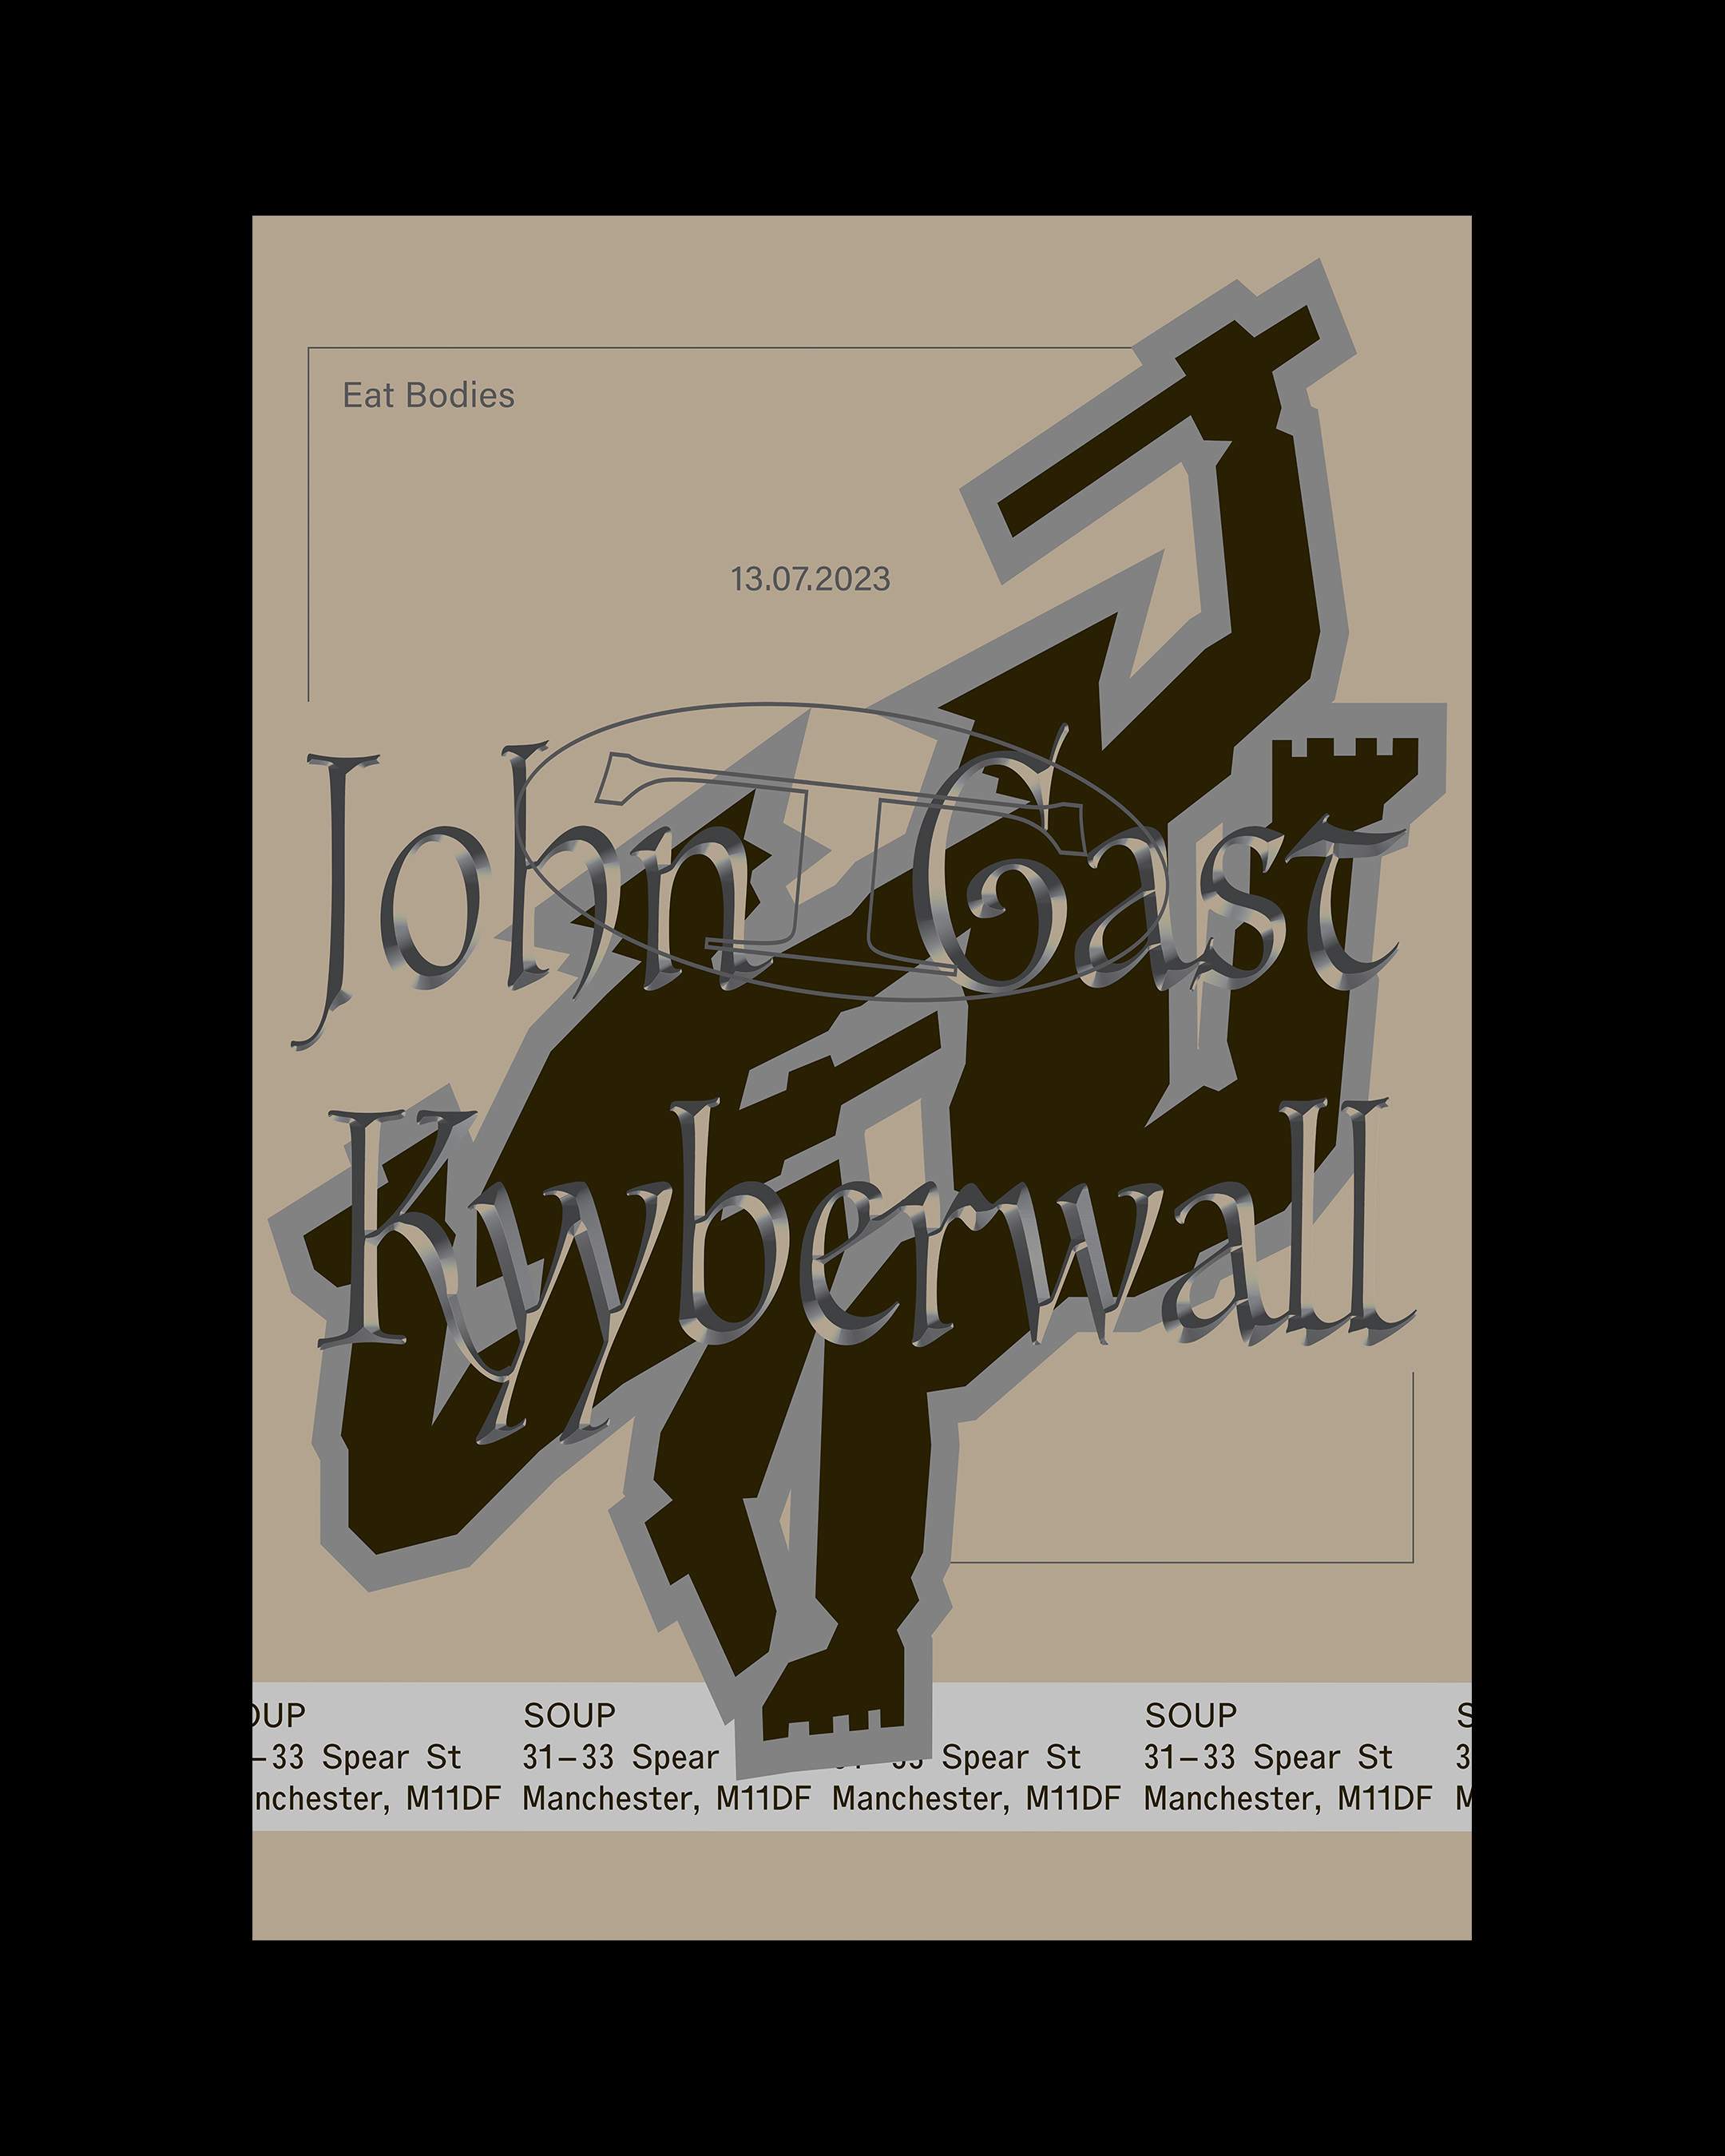 Eat Bodies present: John T. Gast (live) + Kyyberwall (live) - Página frontal